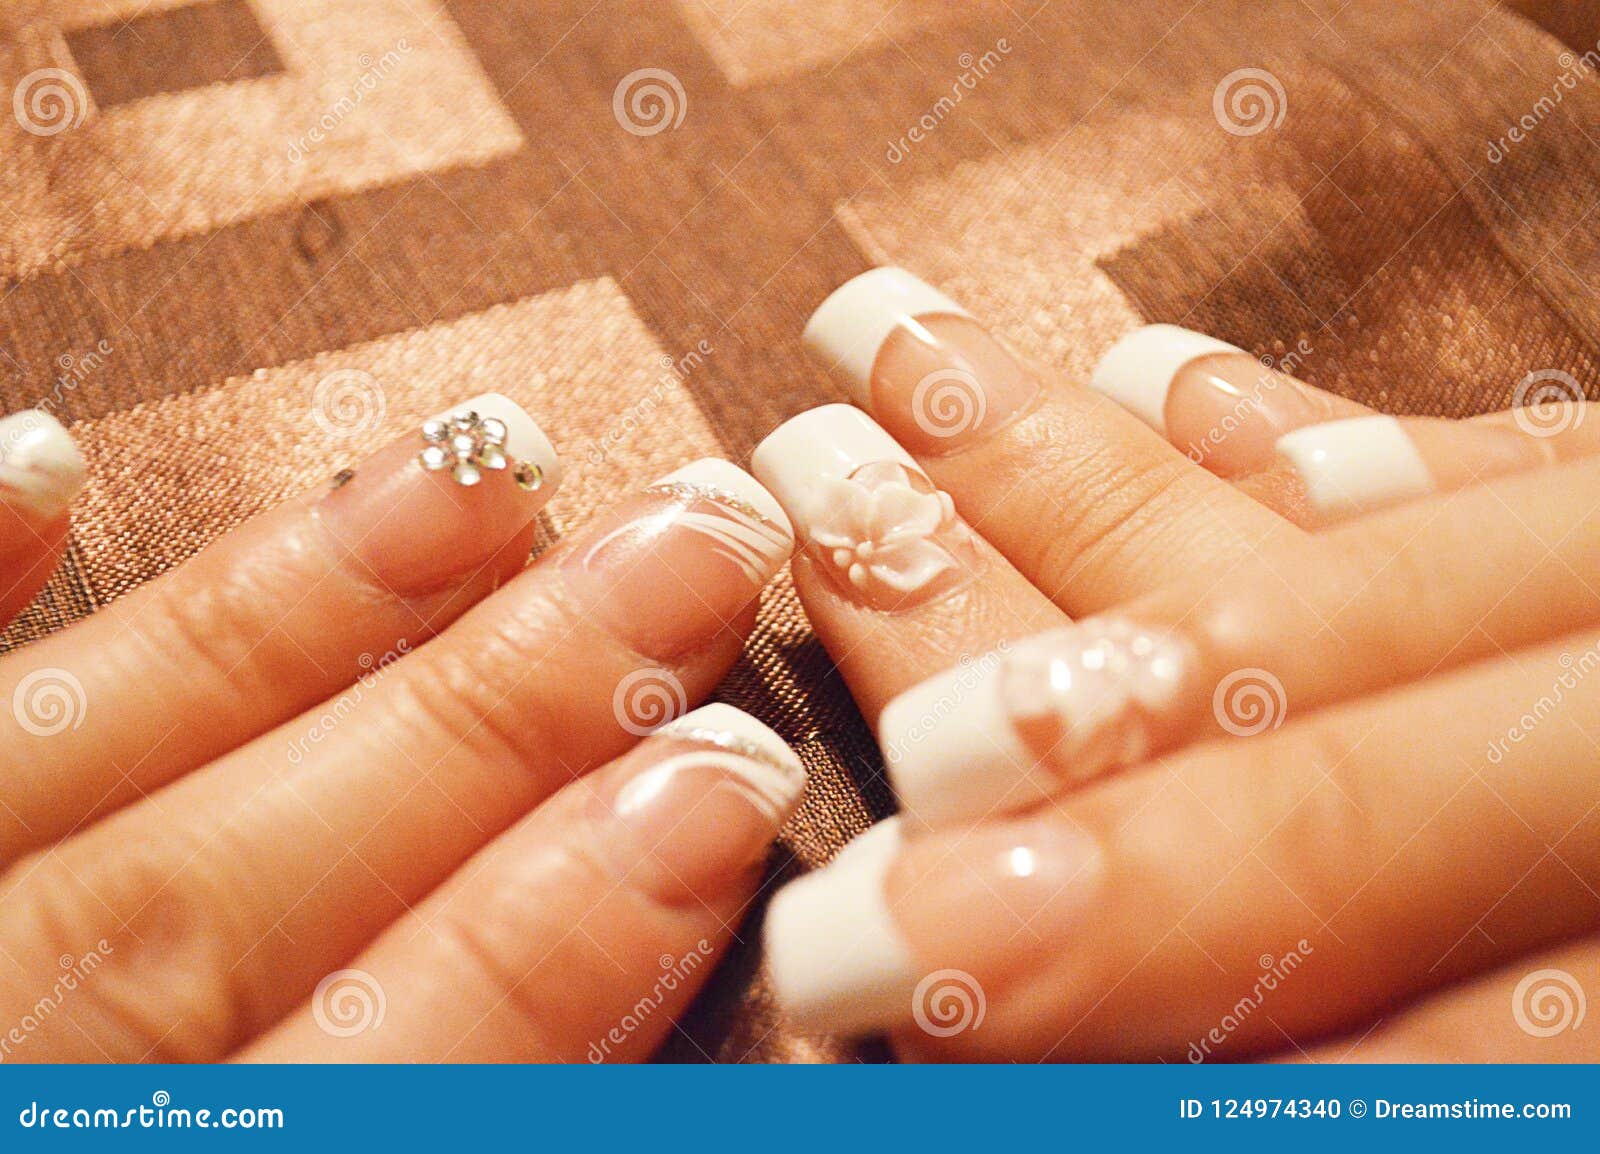 nail art design in white